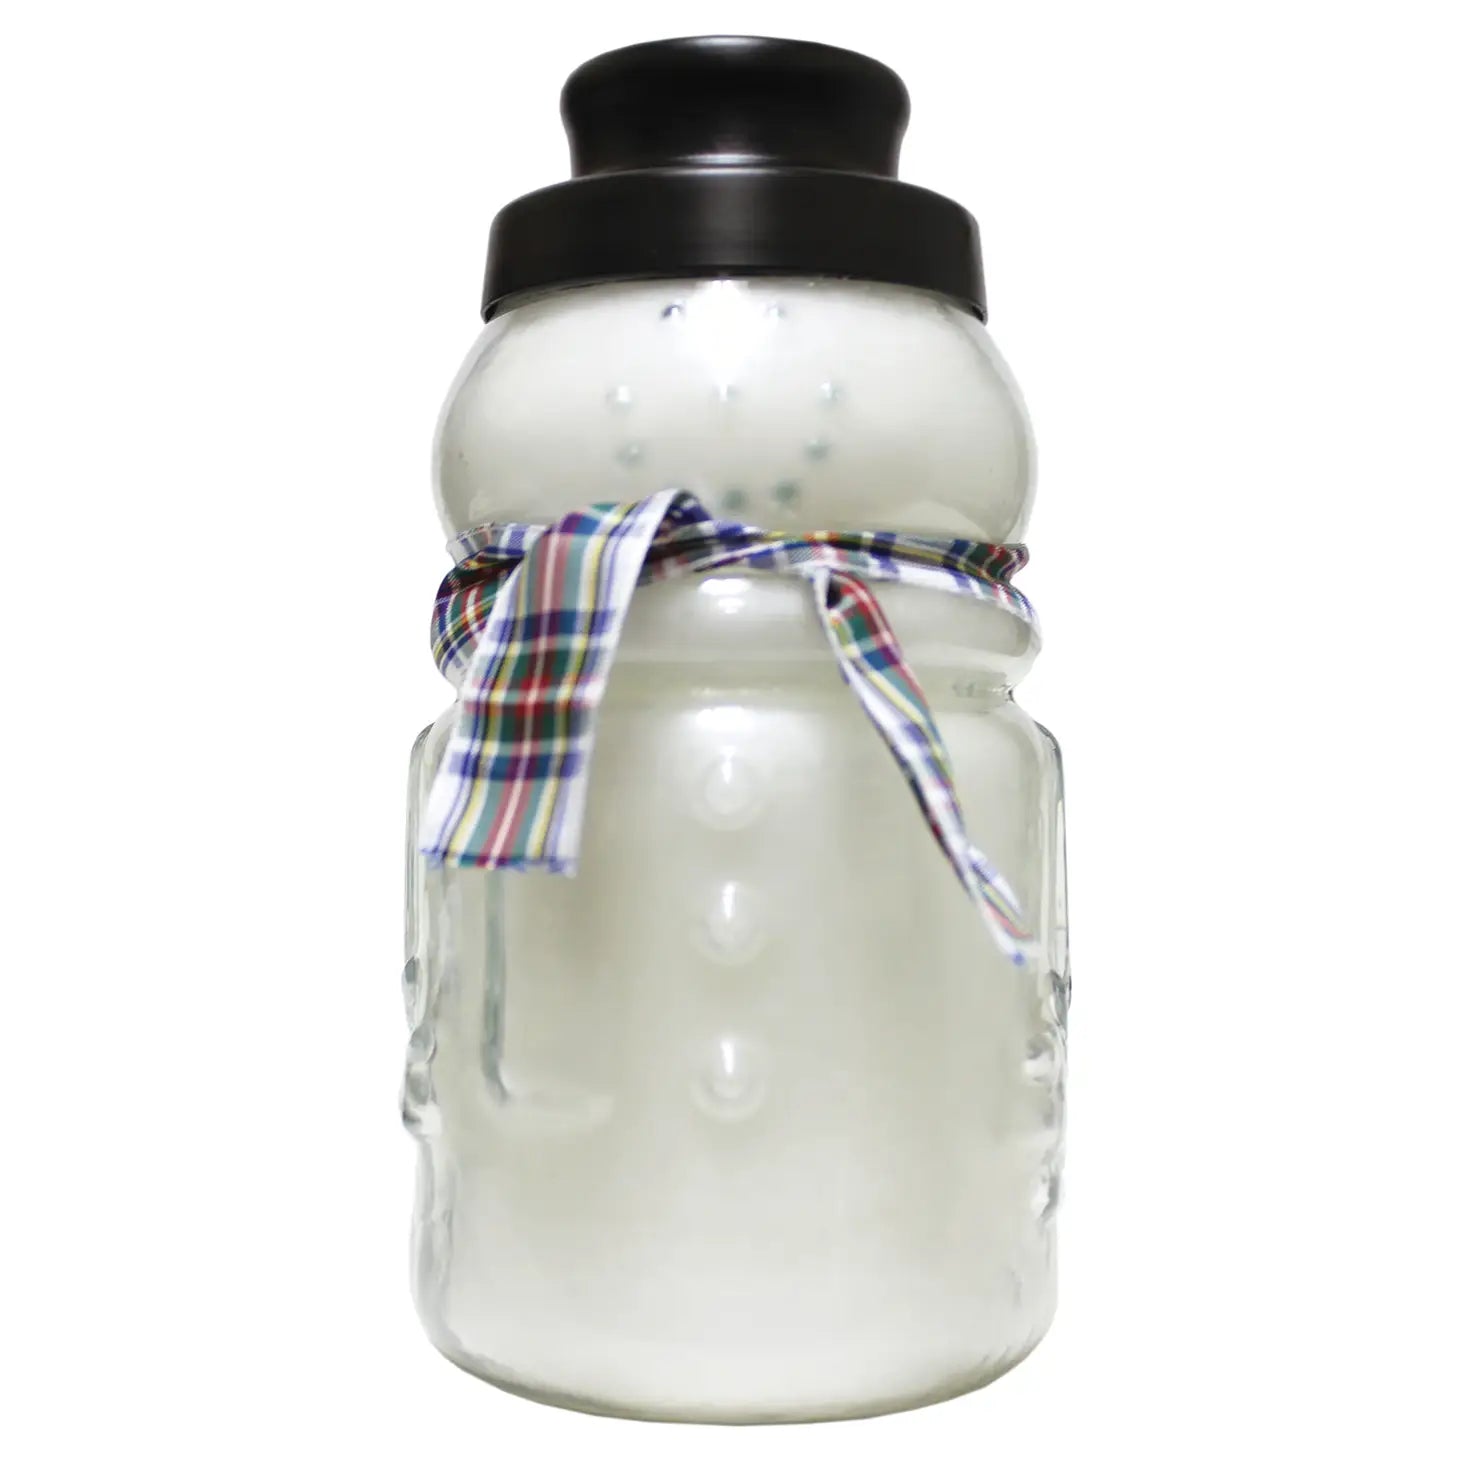 Snowman Jar Candle - Sugar Cookie